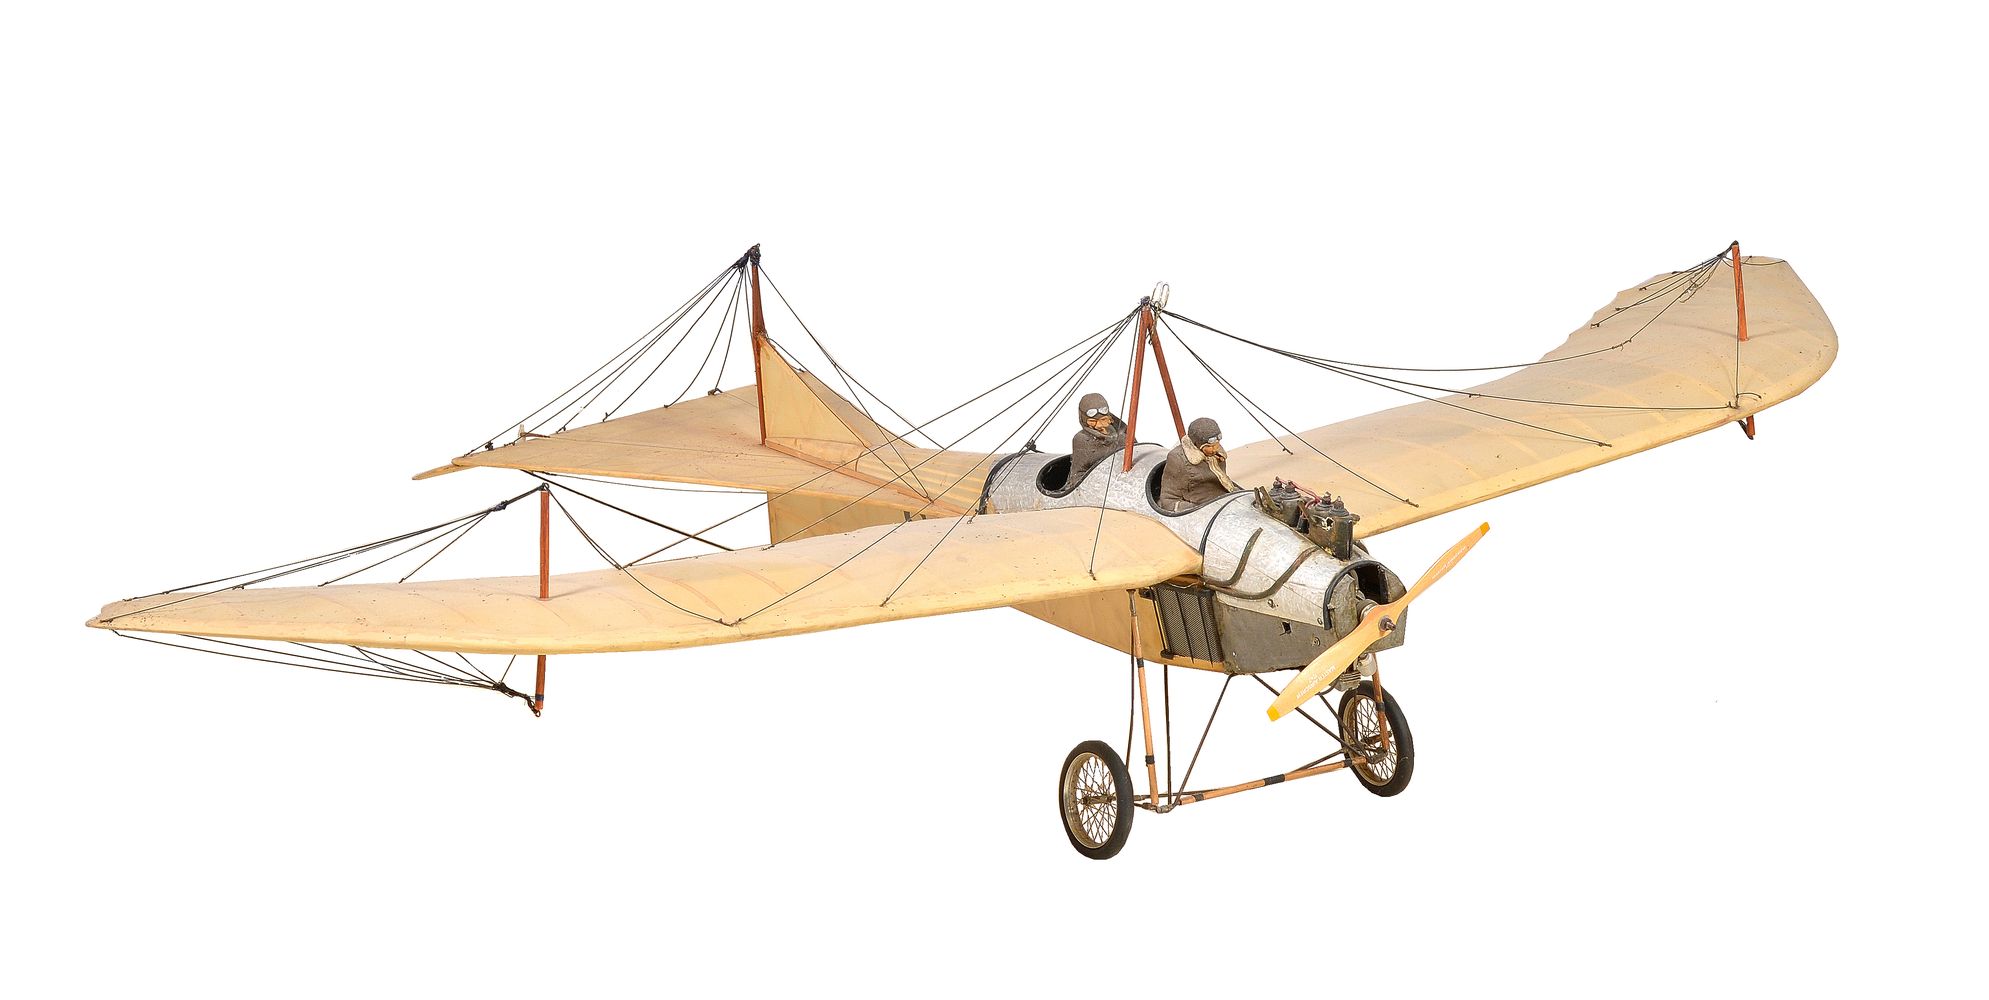 A model of a First World War German Fighter/Bomber Etrich Tauber aeroplane